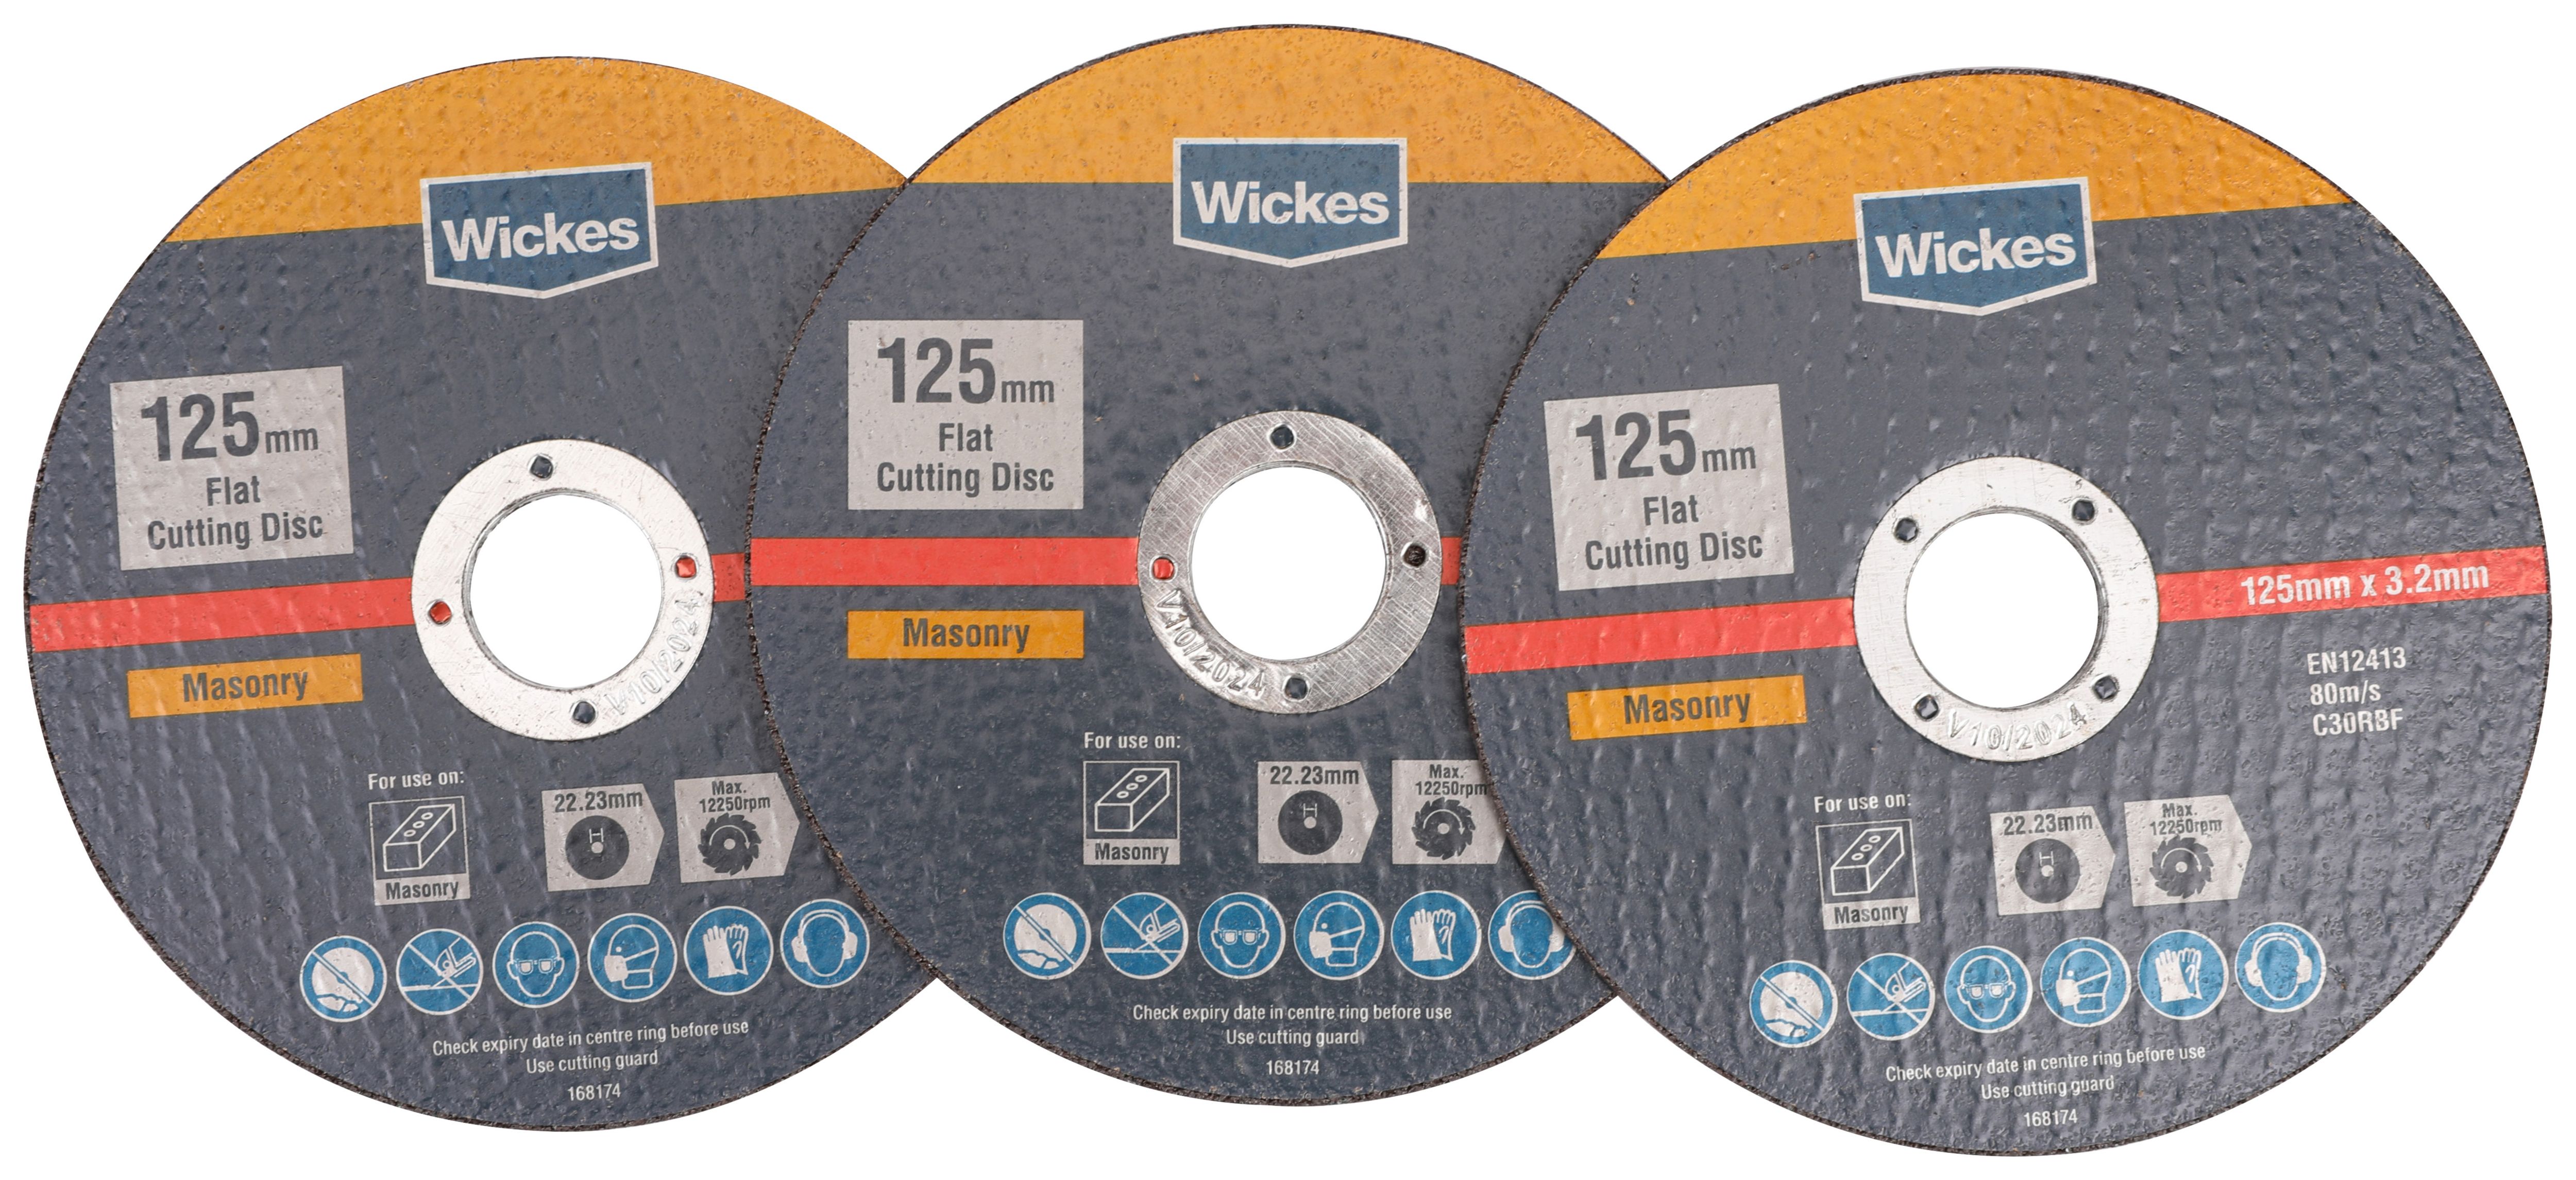 Wickes Masonry Flat Cutting Disc 125mm Pack of 3